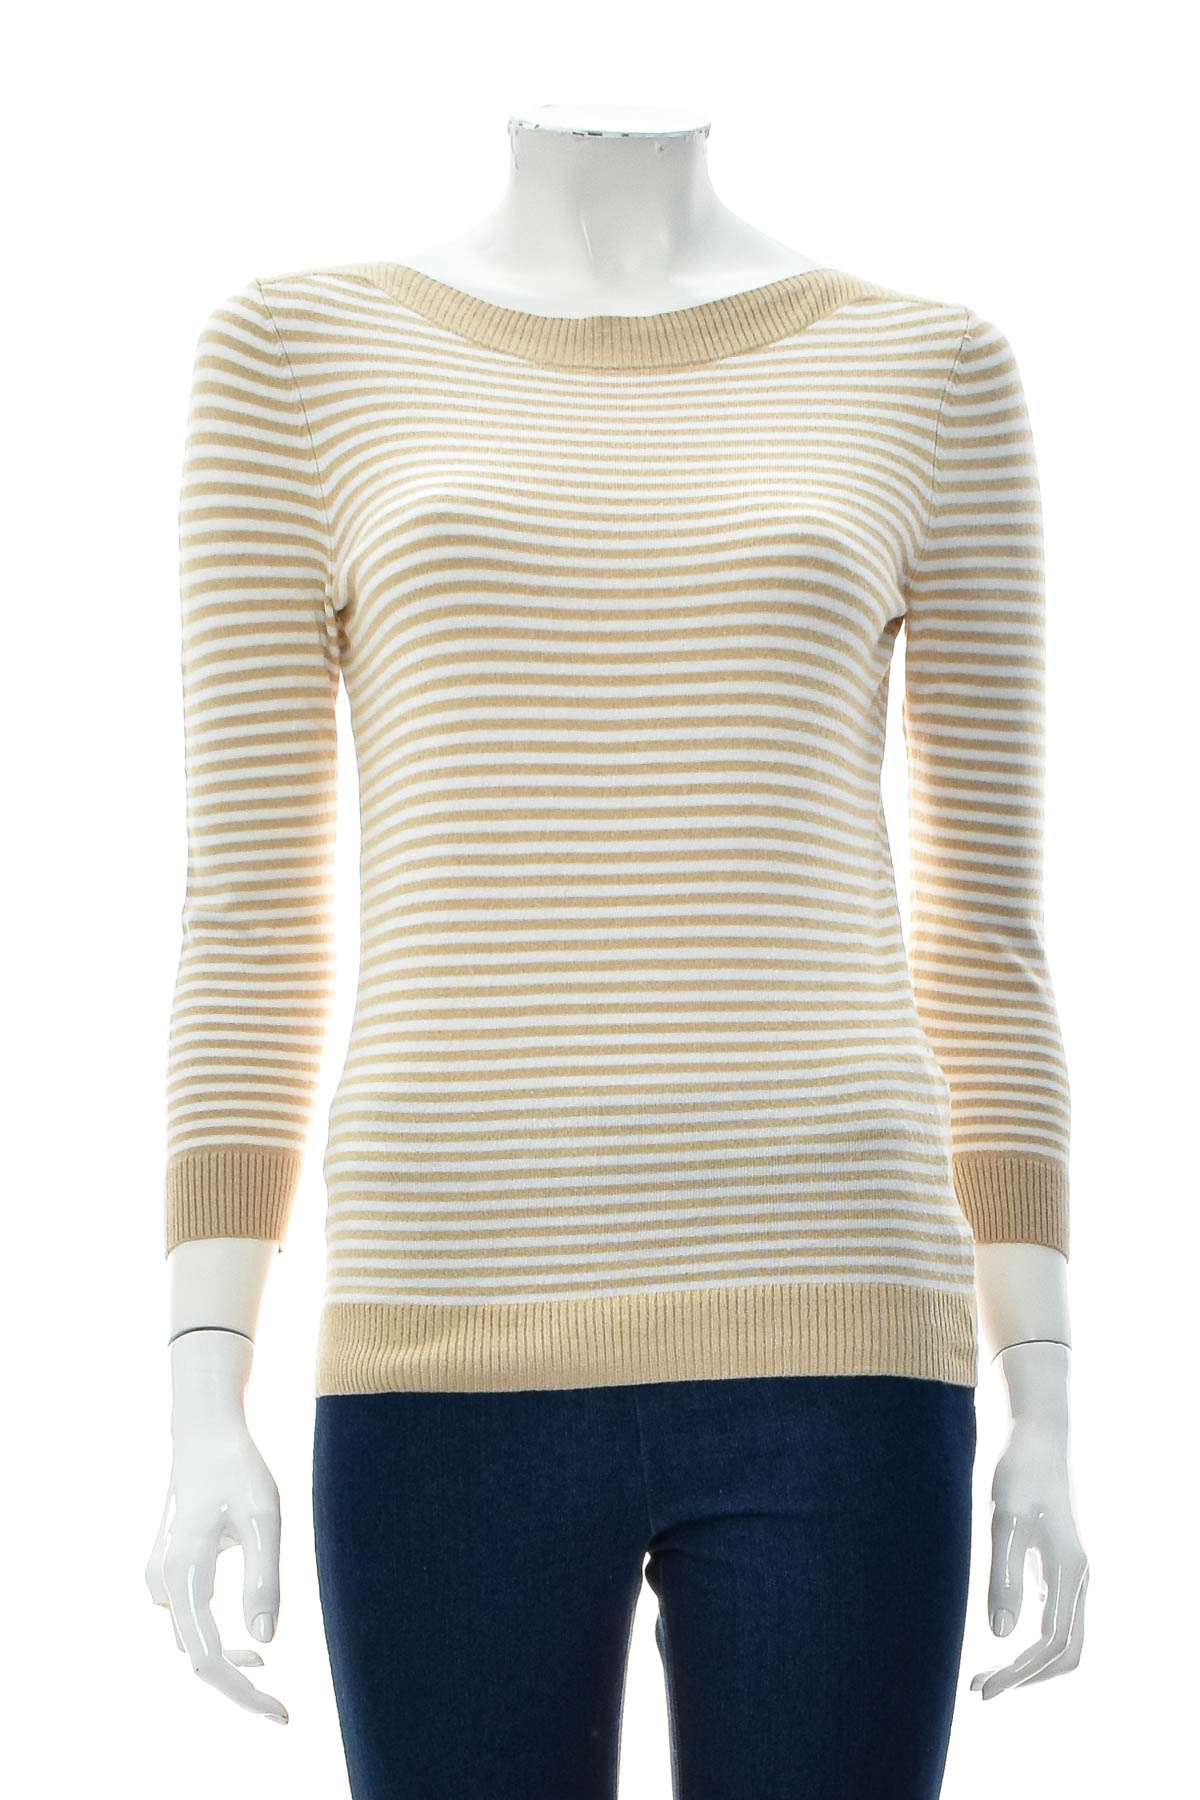 Women's sweater - Ann Taylor - 0